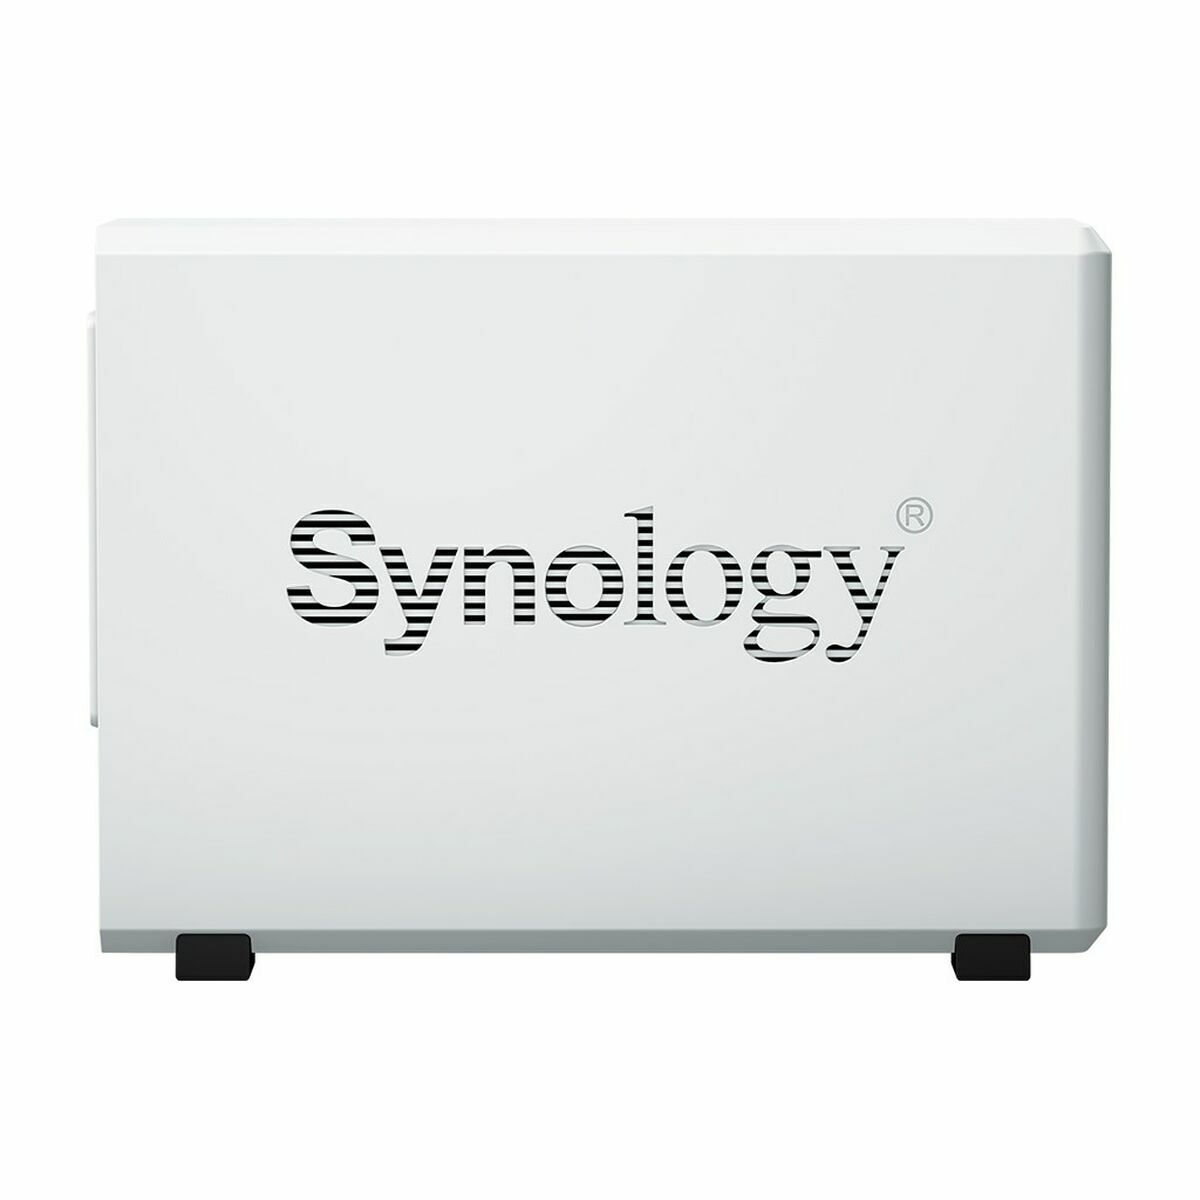 NAS Network Storage Synology DS223J White